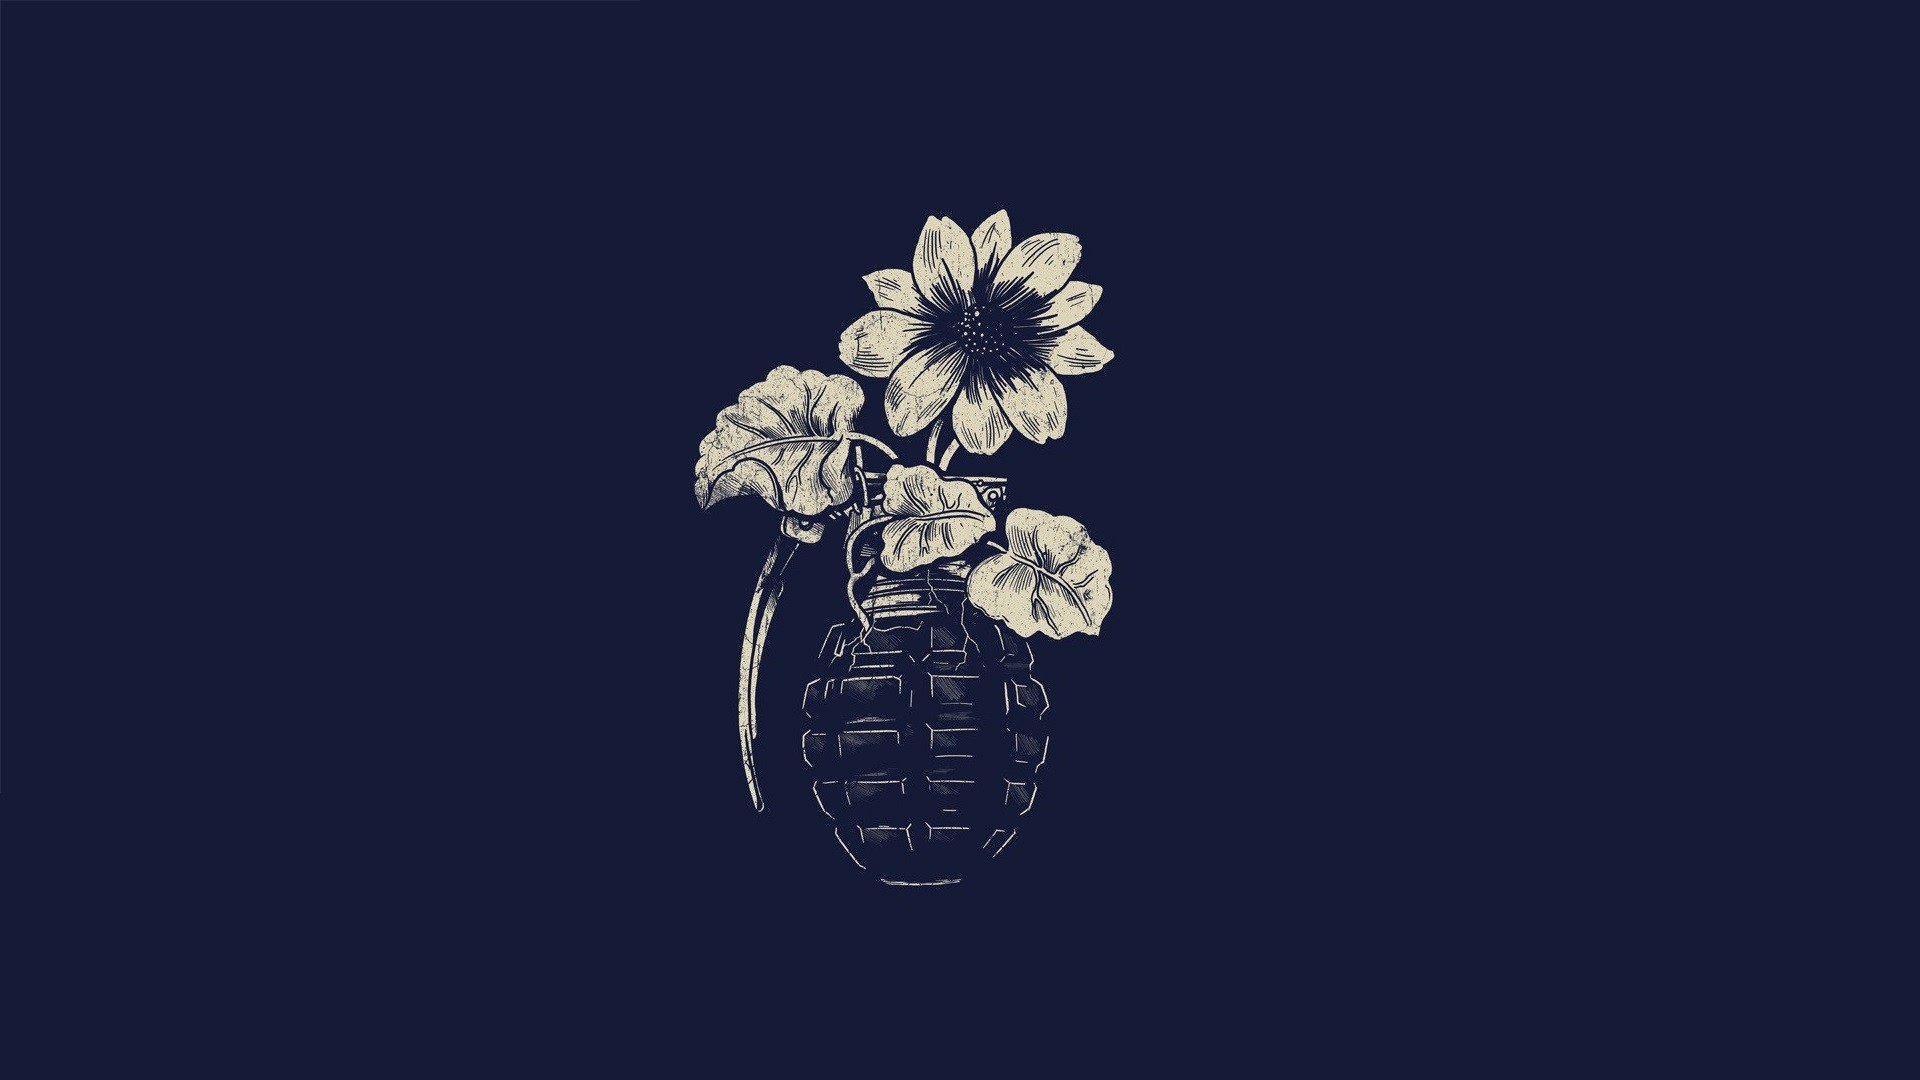 Grenades Minimalism Simple Background Flowers Artwork 1920x1080